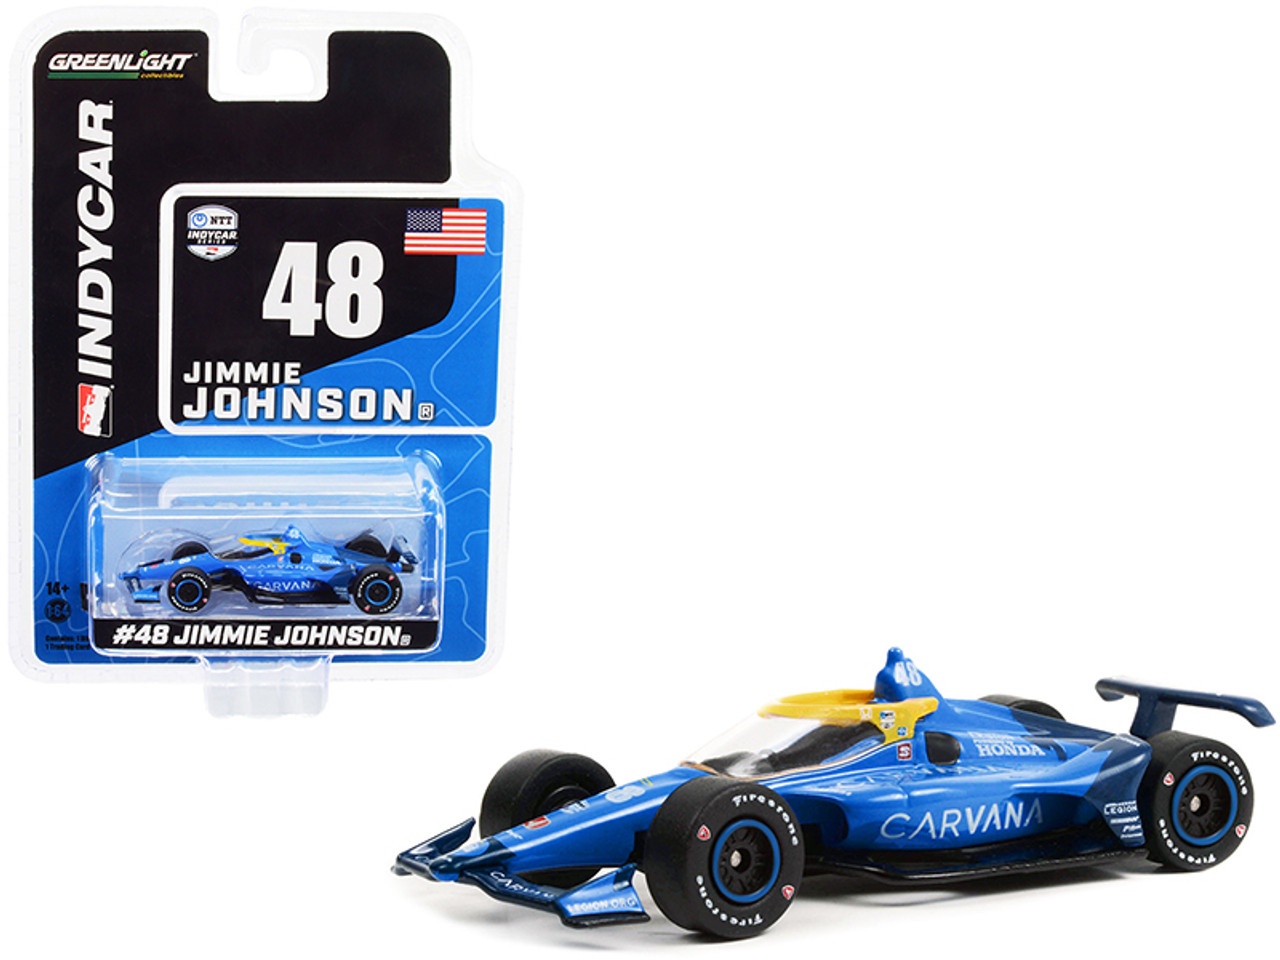 Dallara IndyCar #48 Jimmie Johnson "Carvana" Chip Ganassi Racing (Road Course Configuration) "NTT IndyCar Series" (2022) 1/64 Diecast Model Car by Greenlight